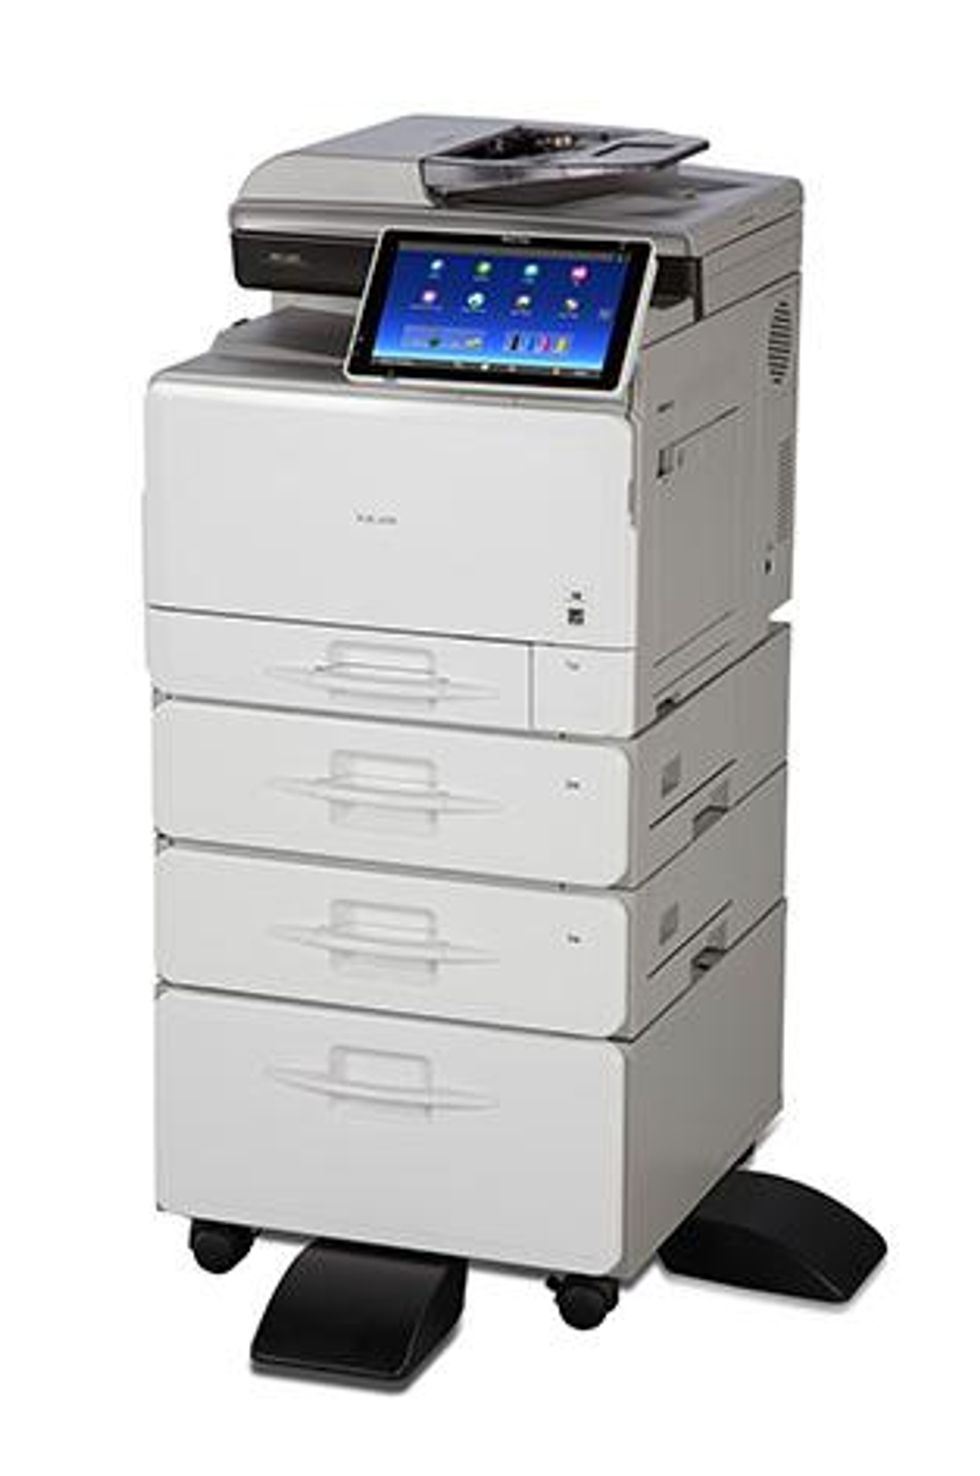  MP C407 Color Laser Multifunction Printer